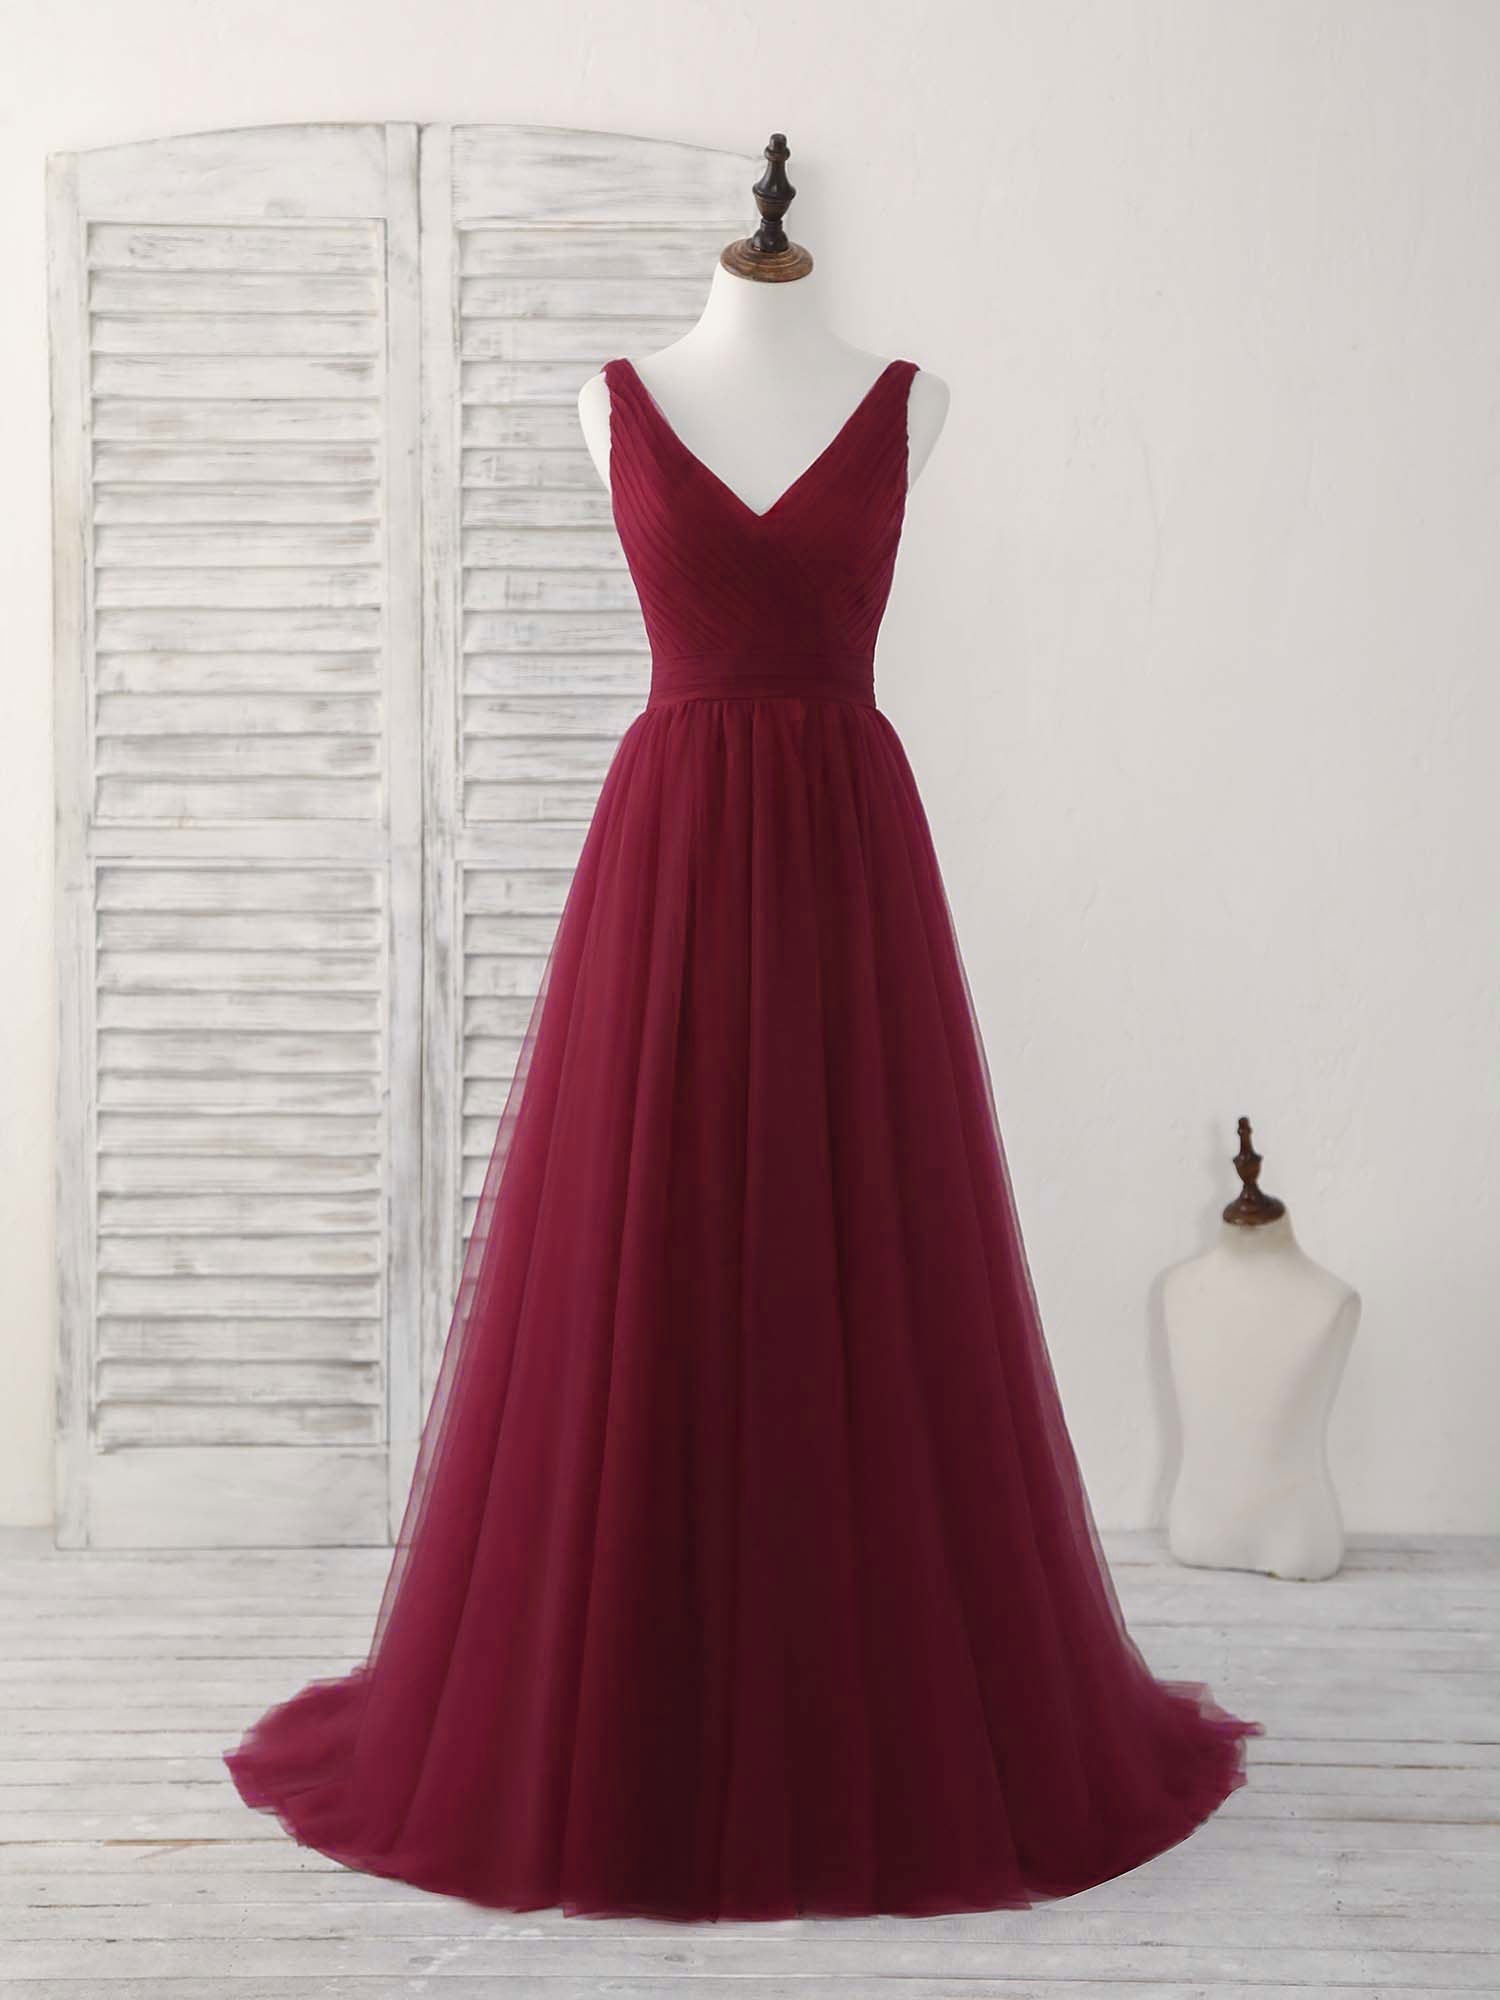 Simple V Neck Burgundy Tulle Long Prom Dress Outfits For Women Burgundy Evening Dress